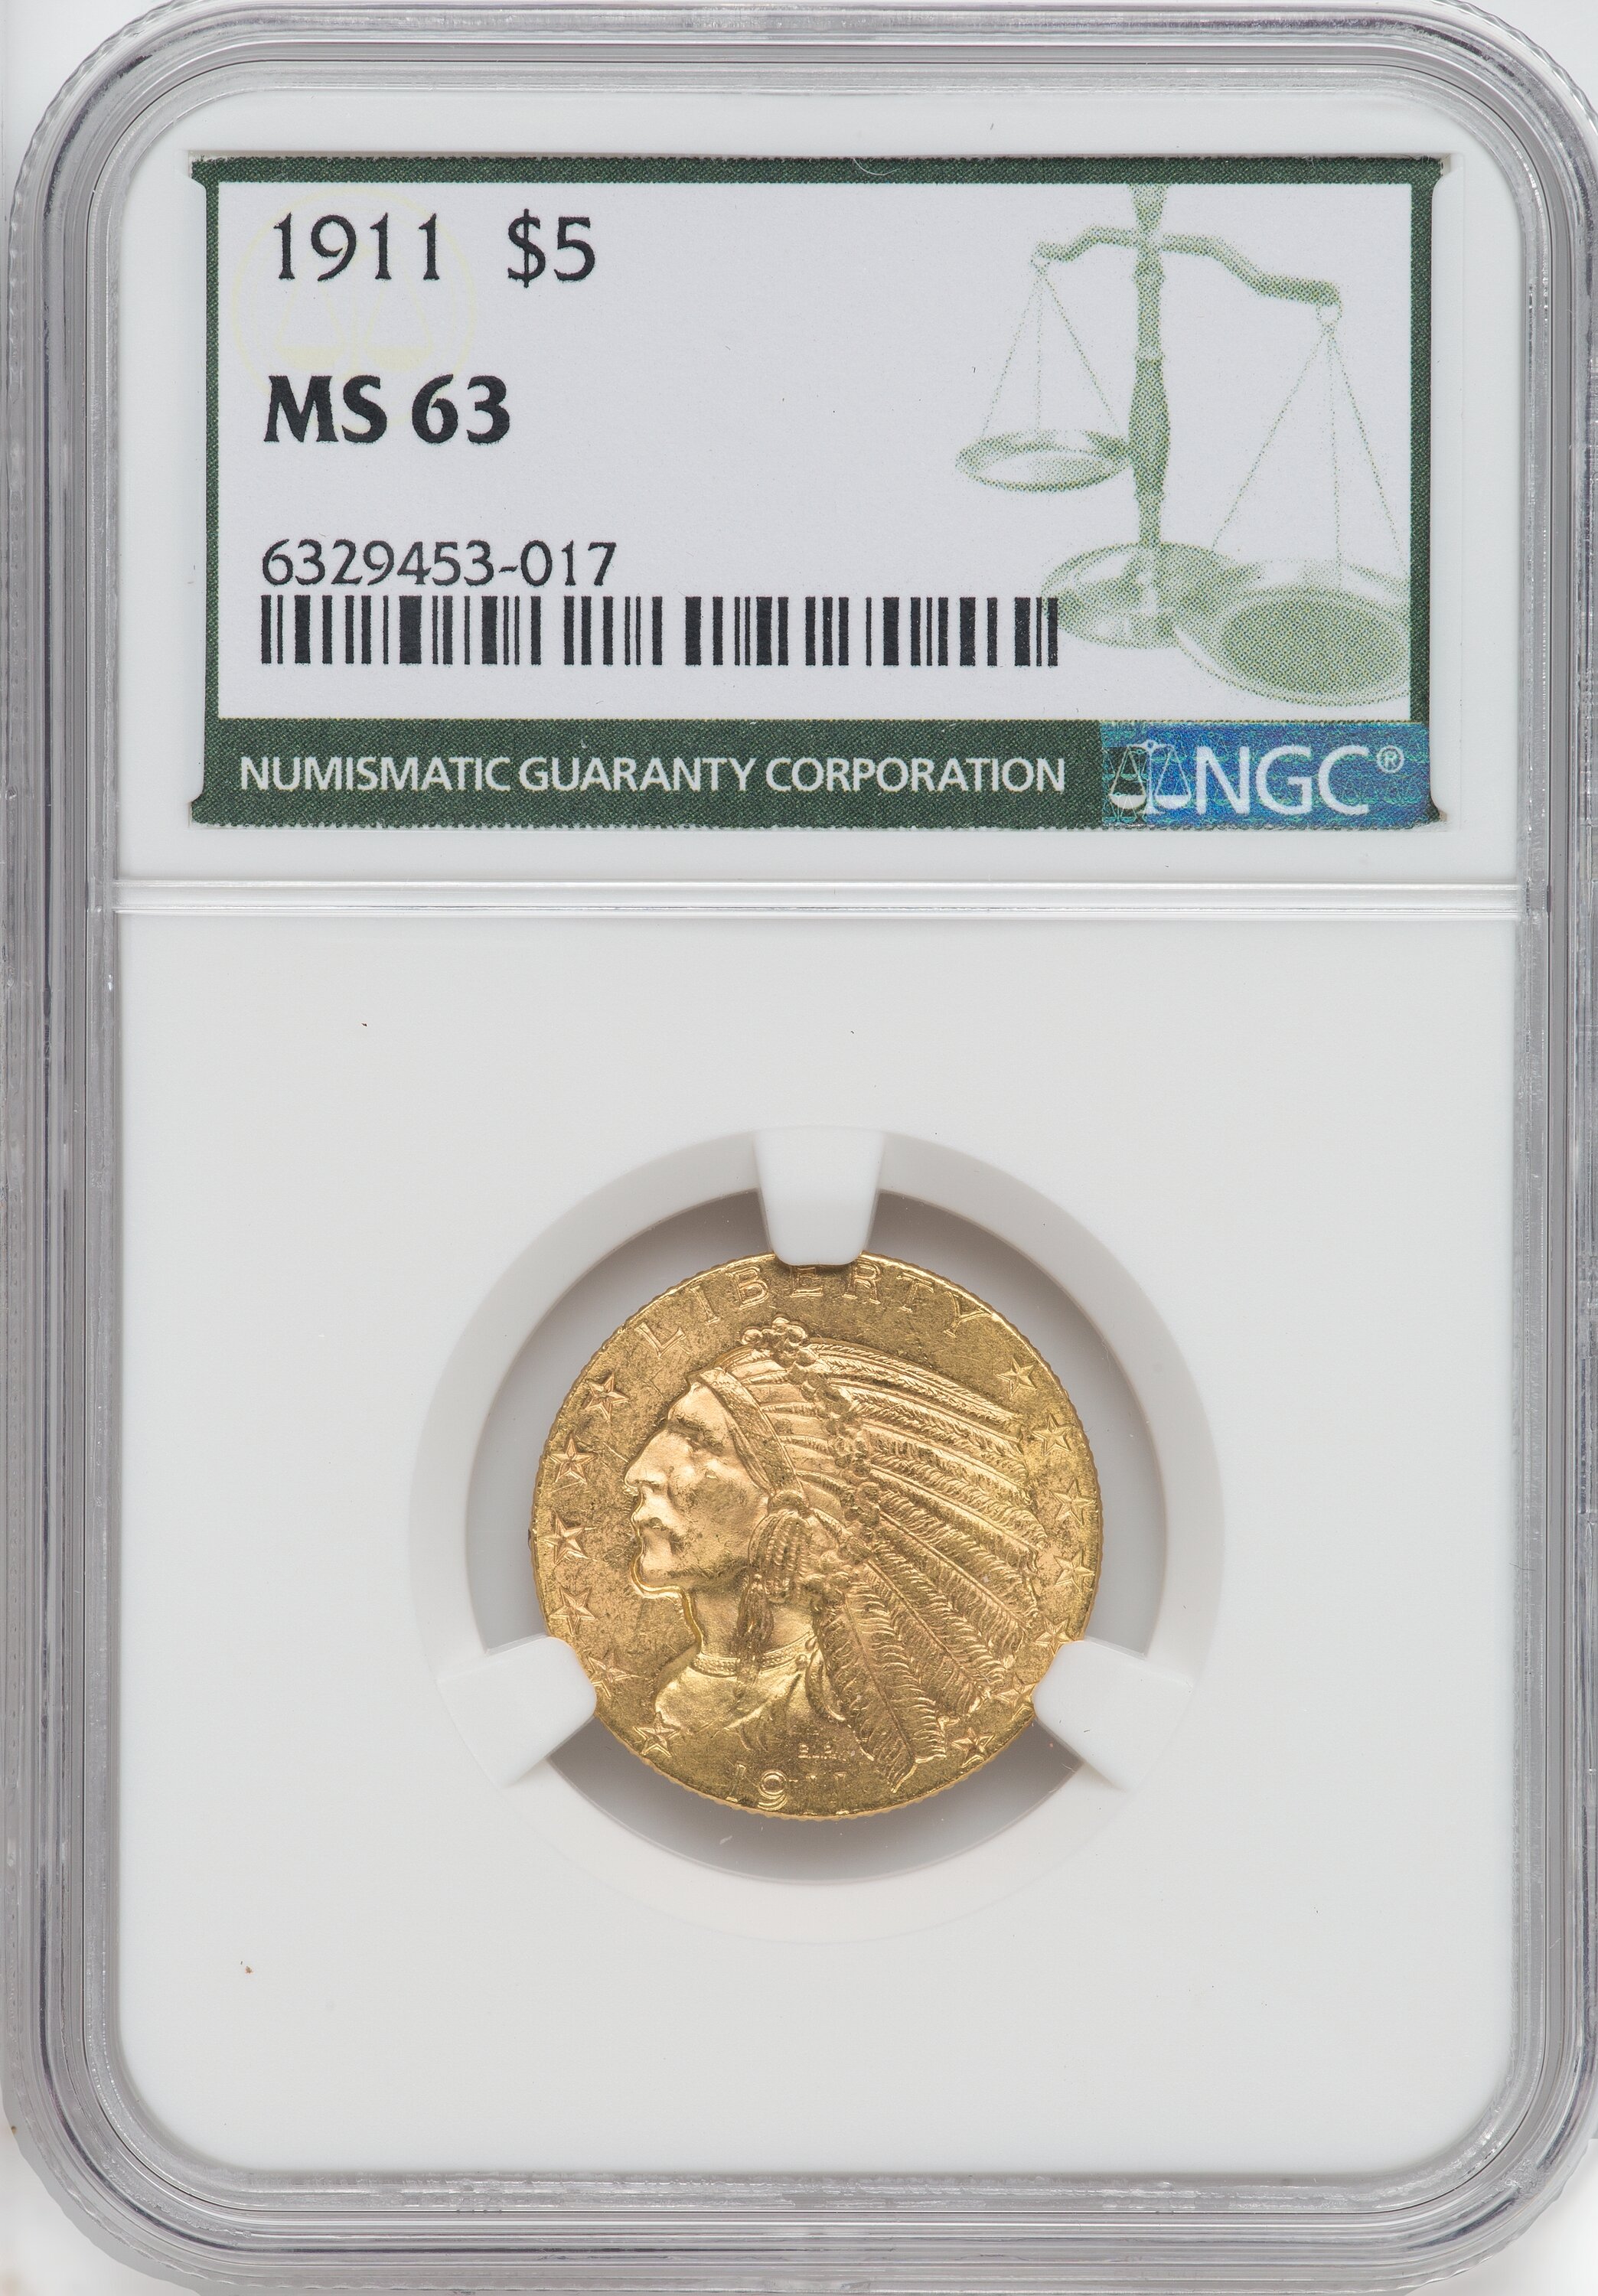 1911 $5 Green Label 63 NGC